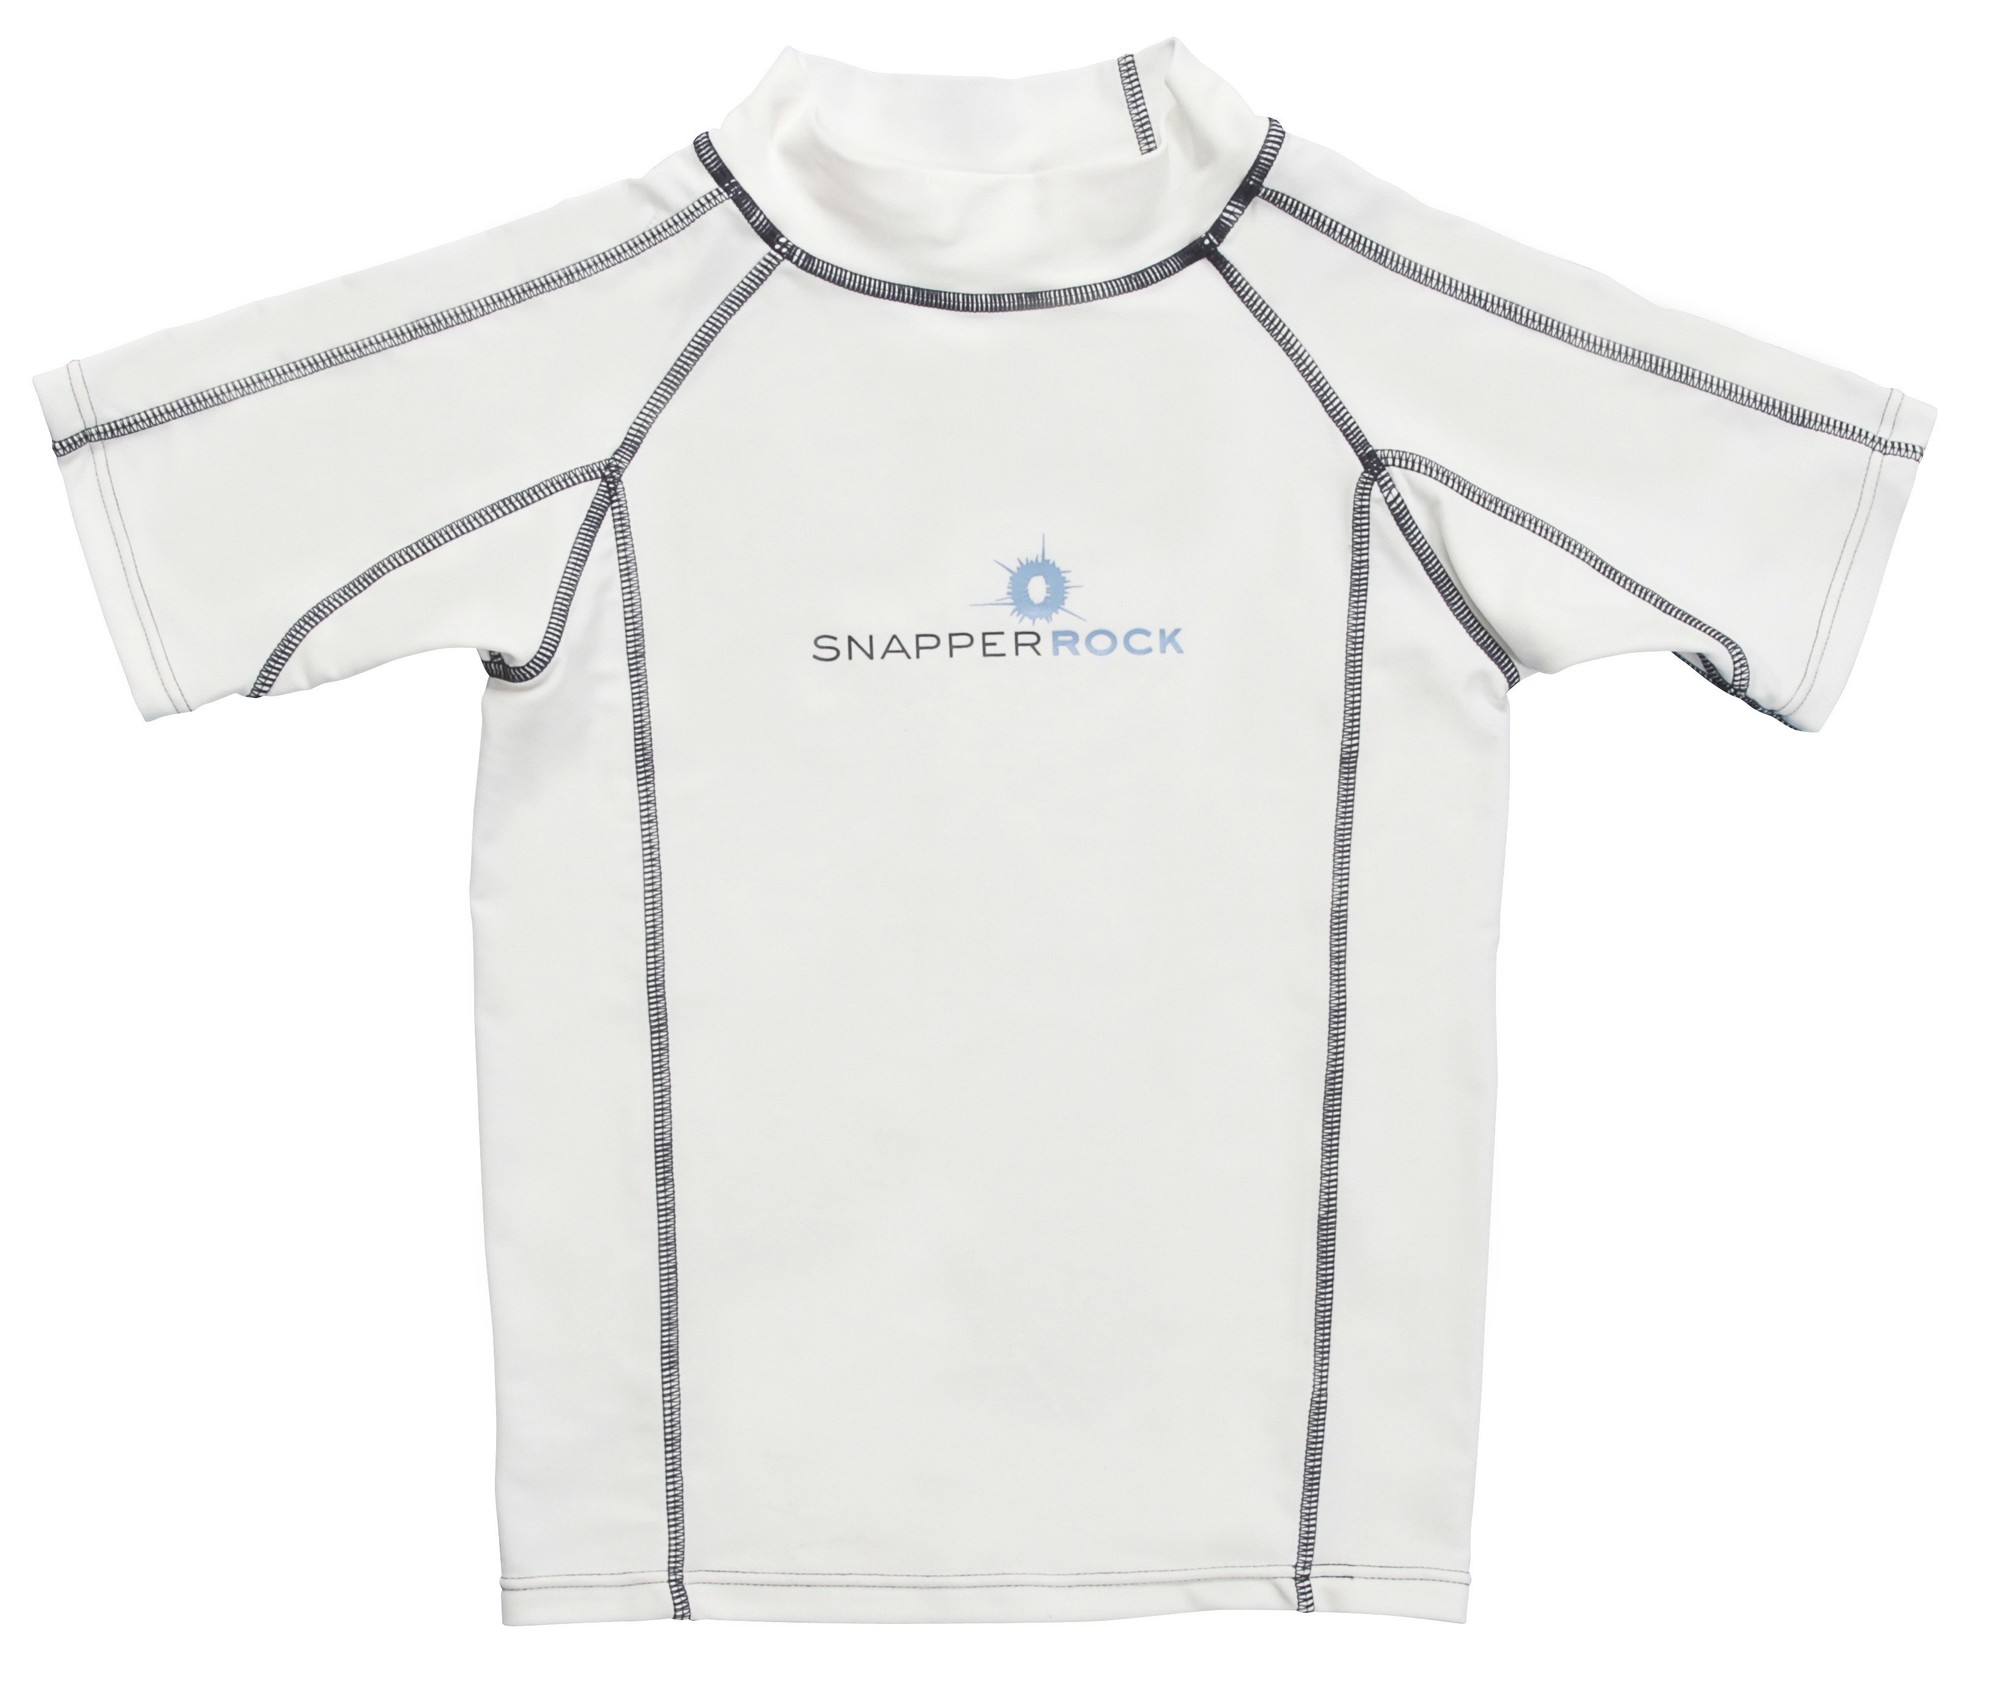 Snapper Rock - UV schützendes T-Shirt mit kurzem Arm - Weiß